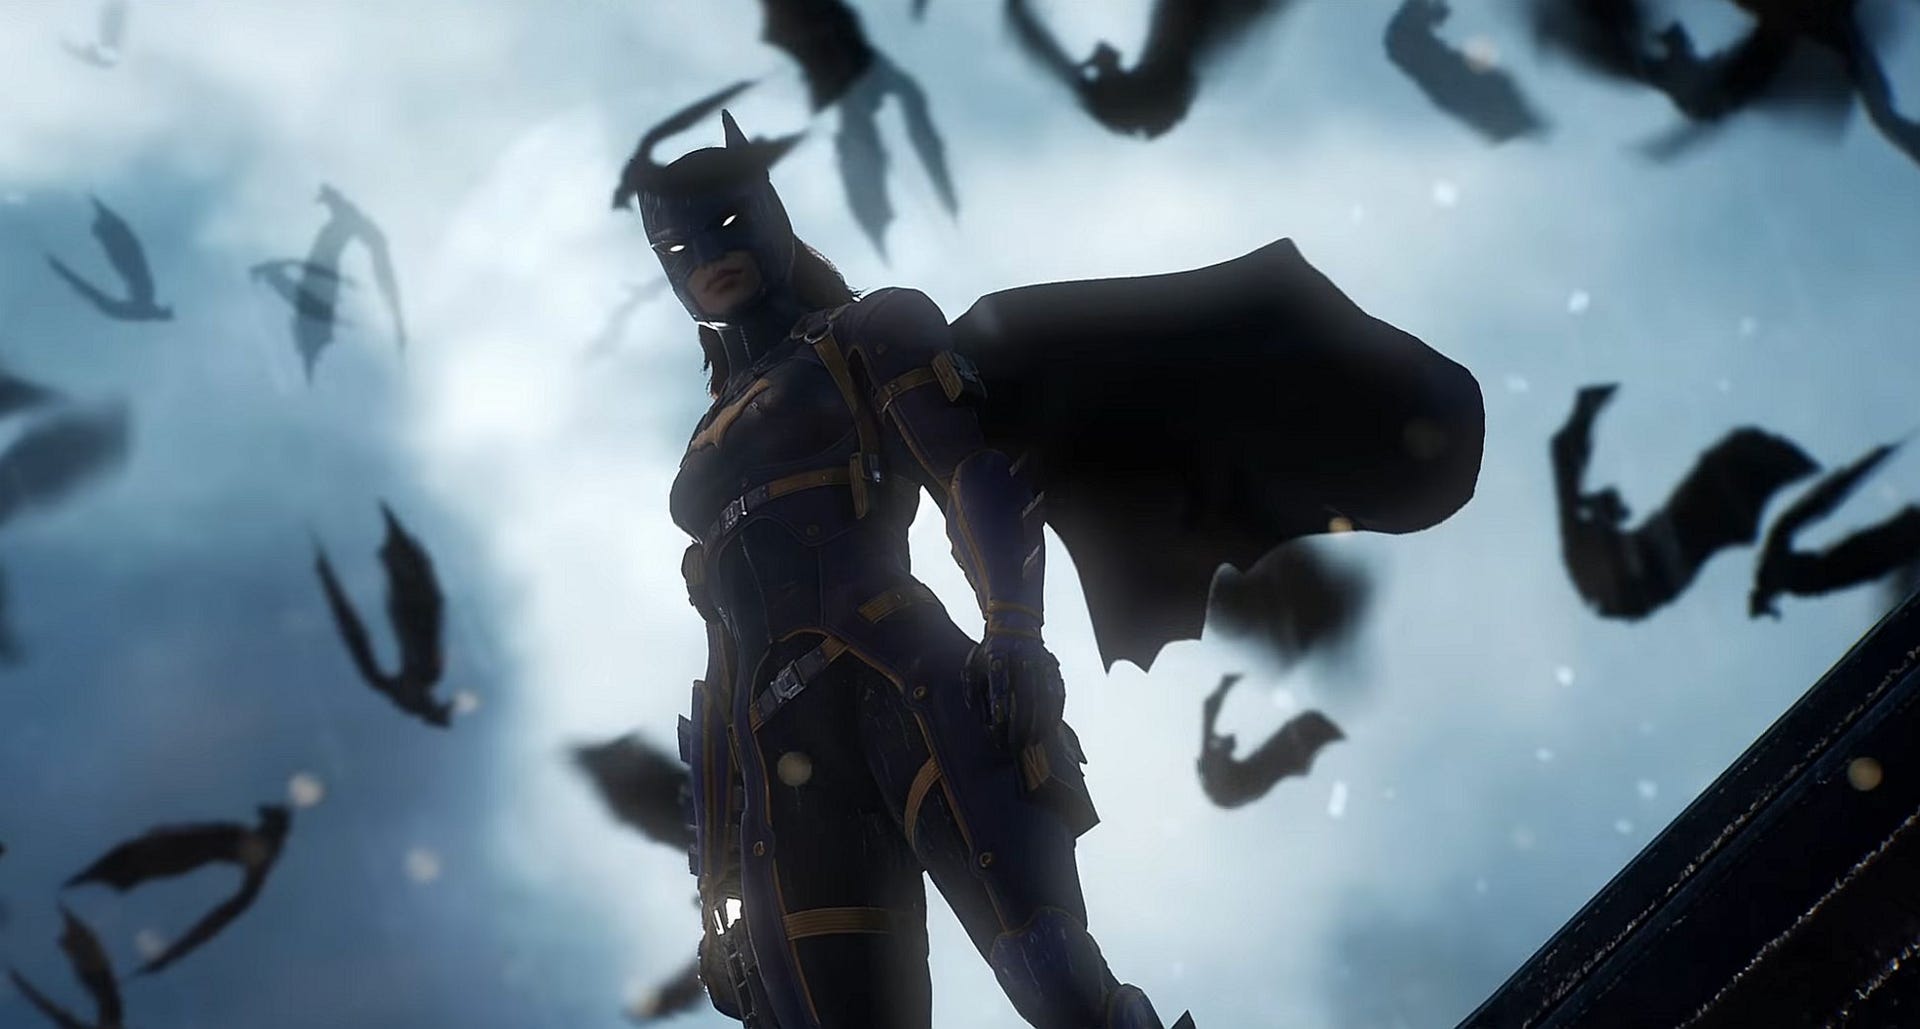 Gotham Knights trailer shows Batgirl kicking some backsides | VG247